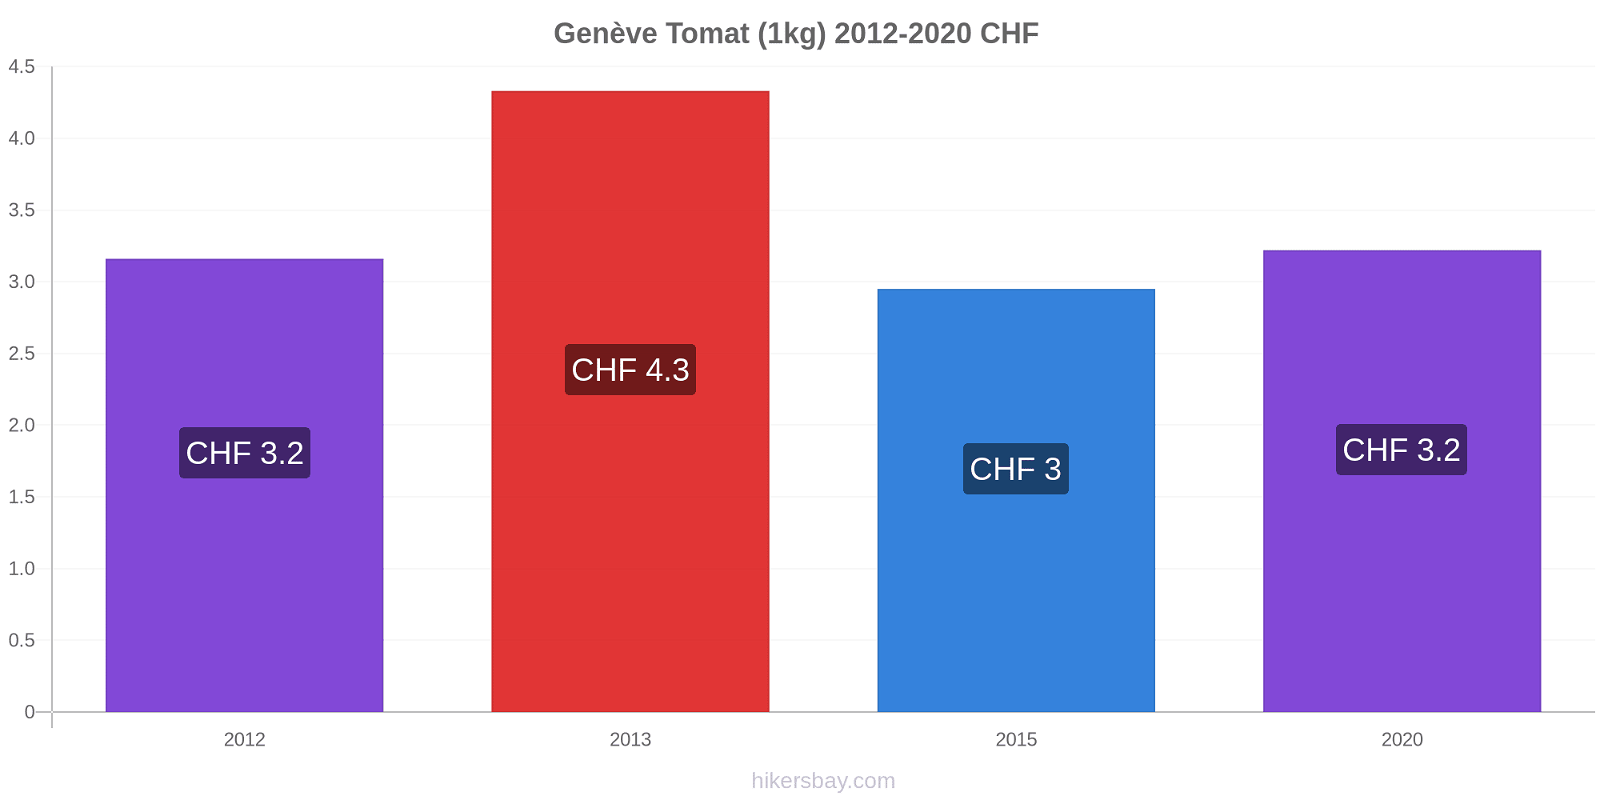 Genève prisendringer Tomat (1kg) hikersbay.com